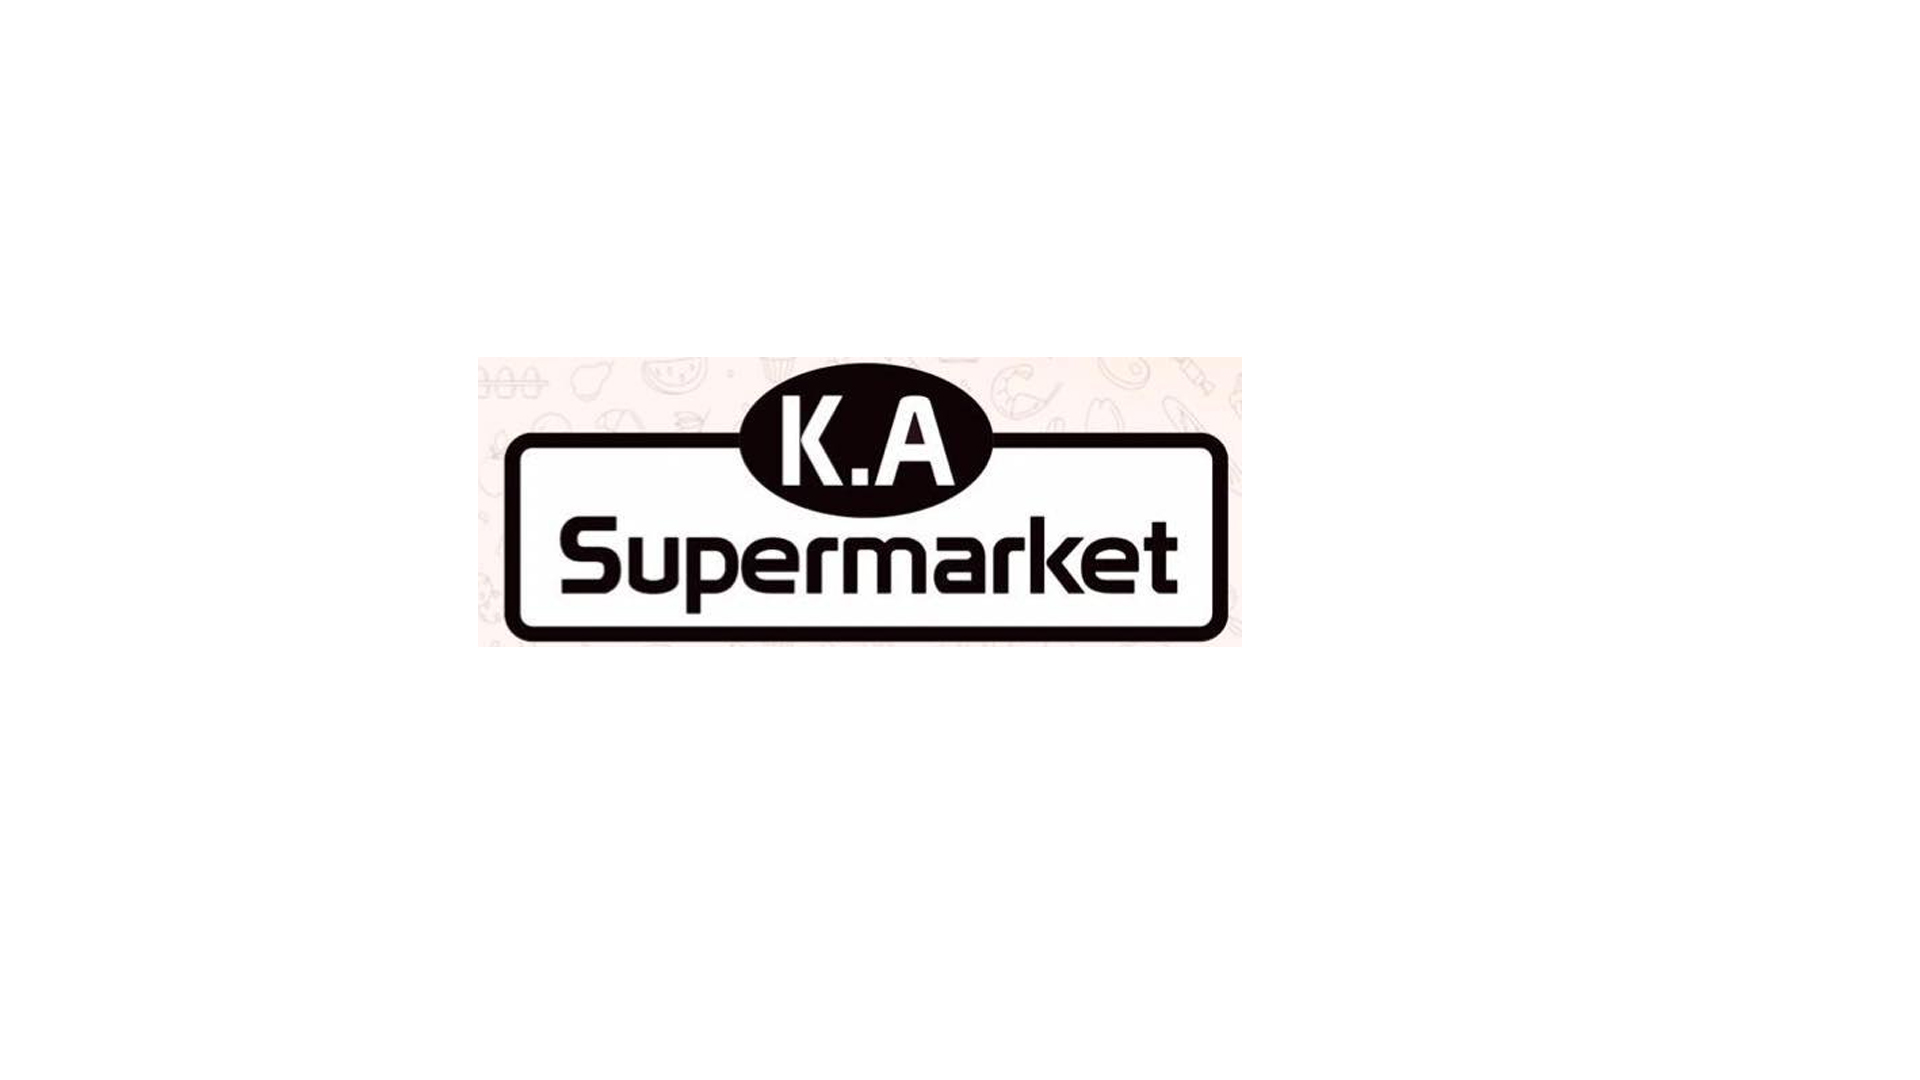 ka supermarket